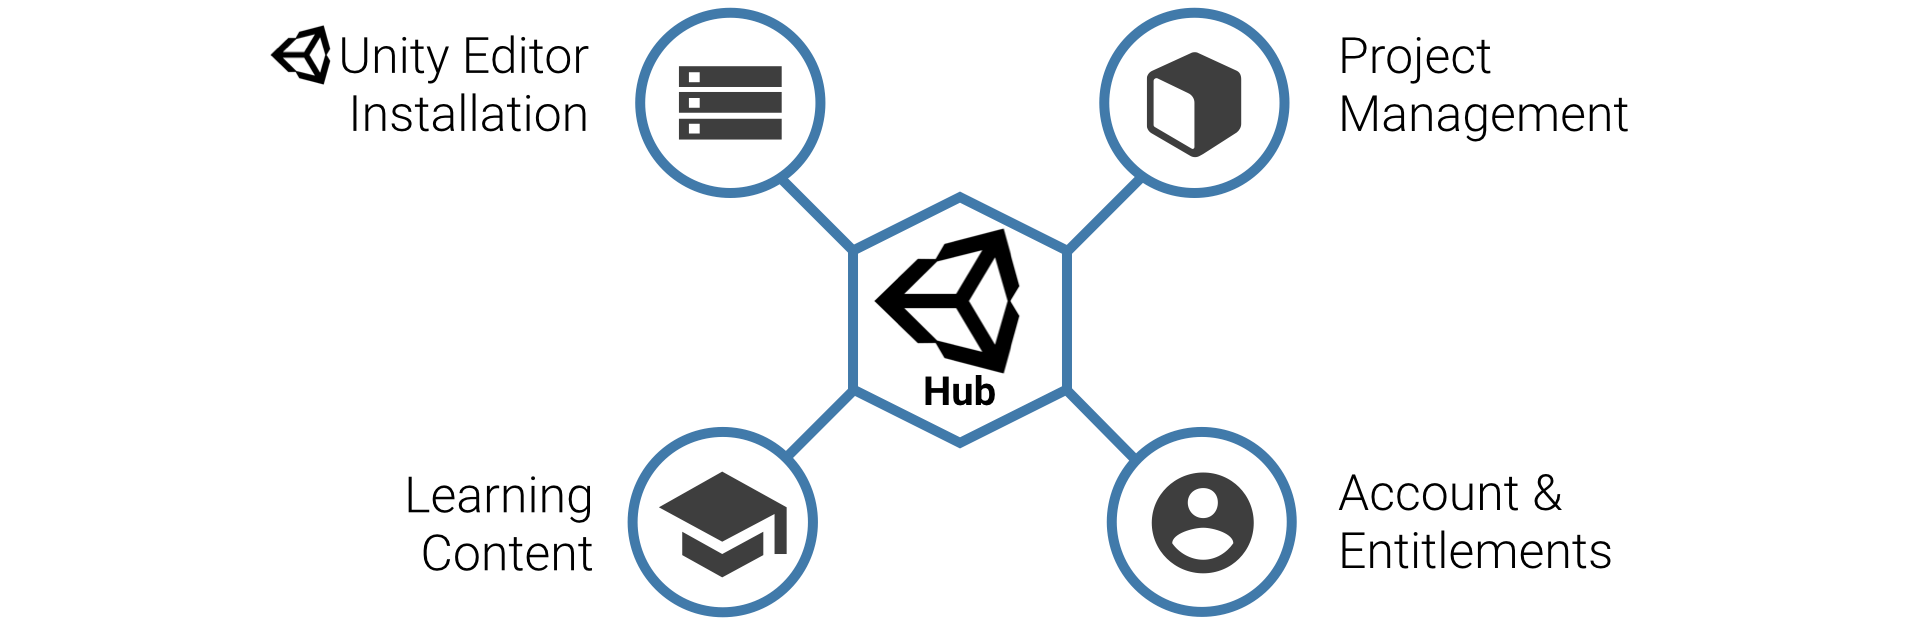 unity hub download linux